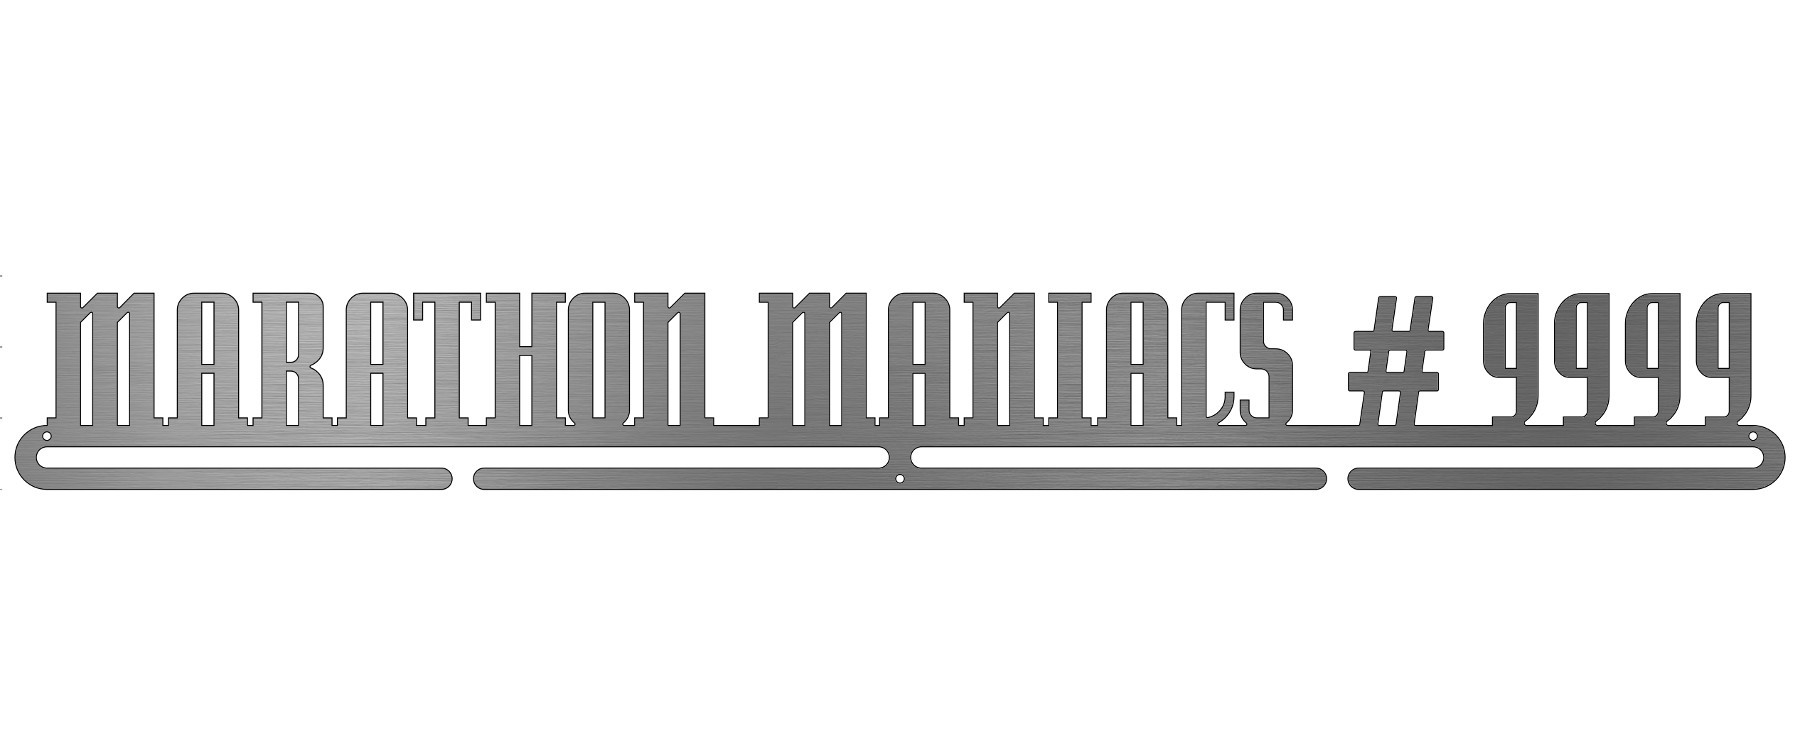 Marathon Maniacs with custom Maniacs number